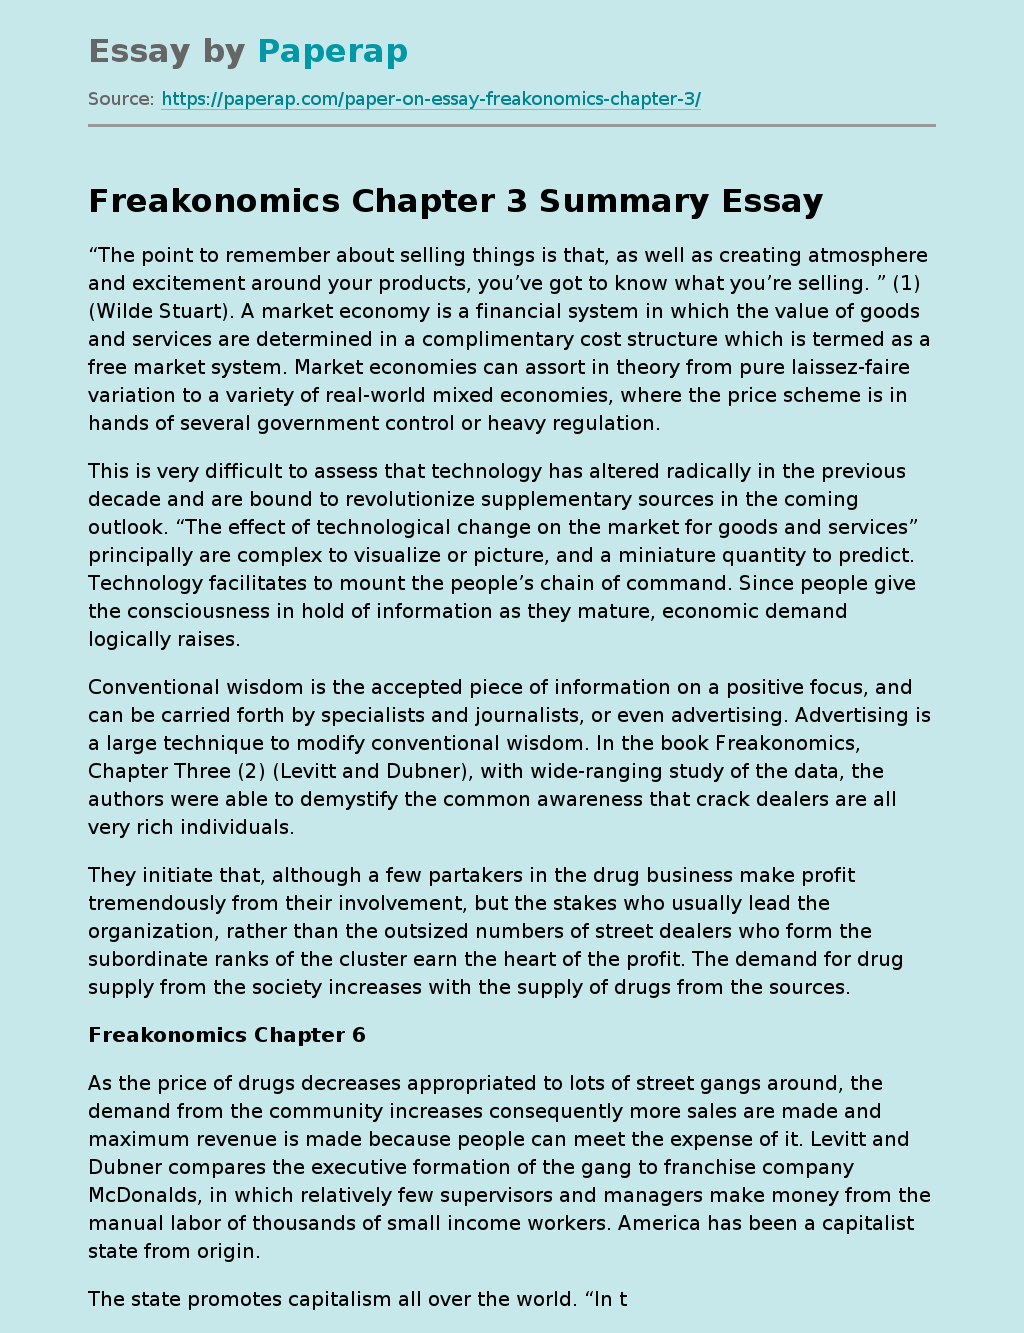 Freakonomics Chapter 3 Summary